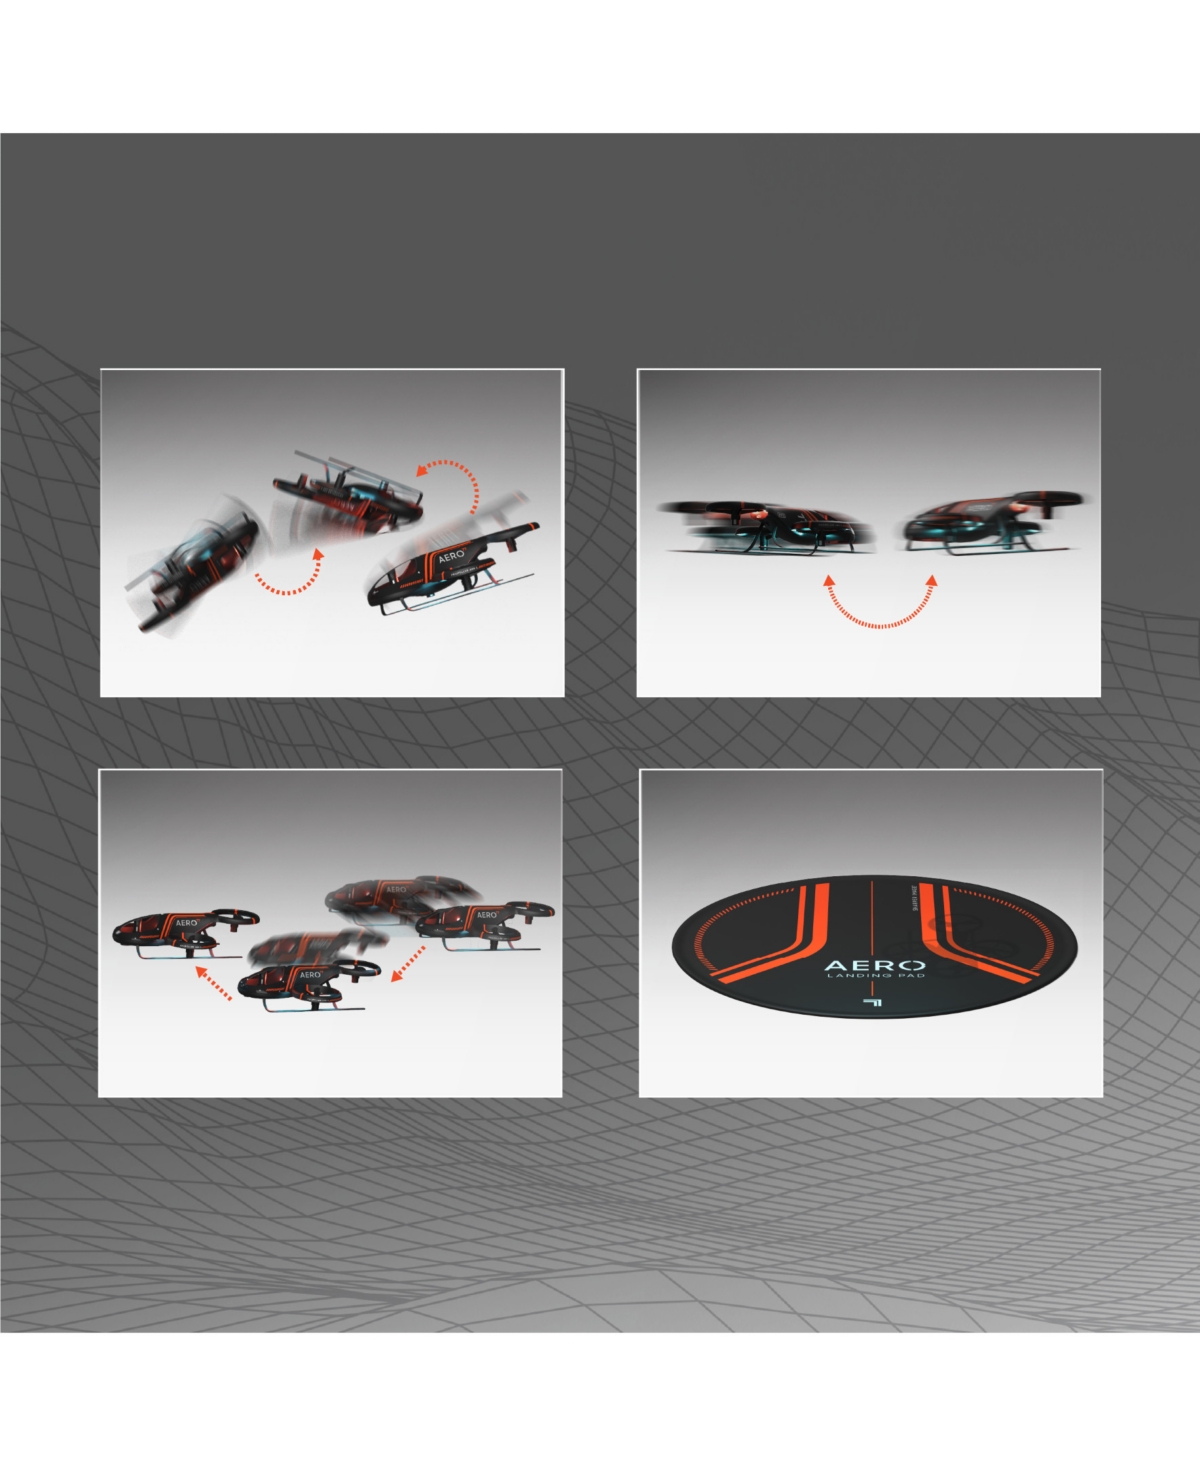 Shop Sharper Image X-treme Aero High-performance Remote Control Drone In Black